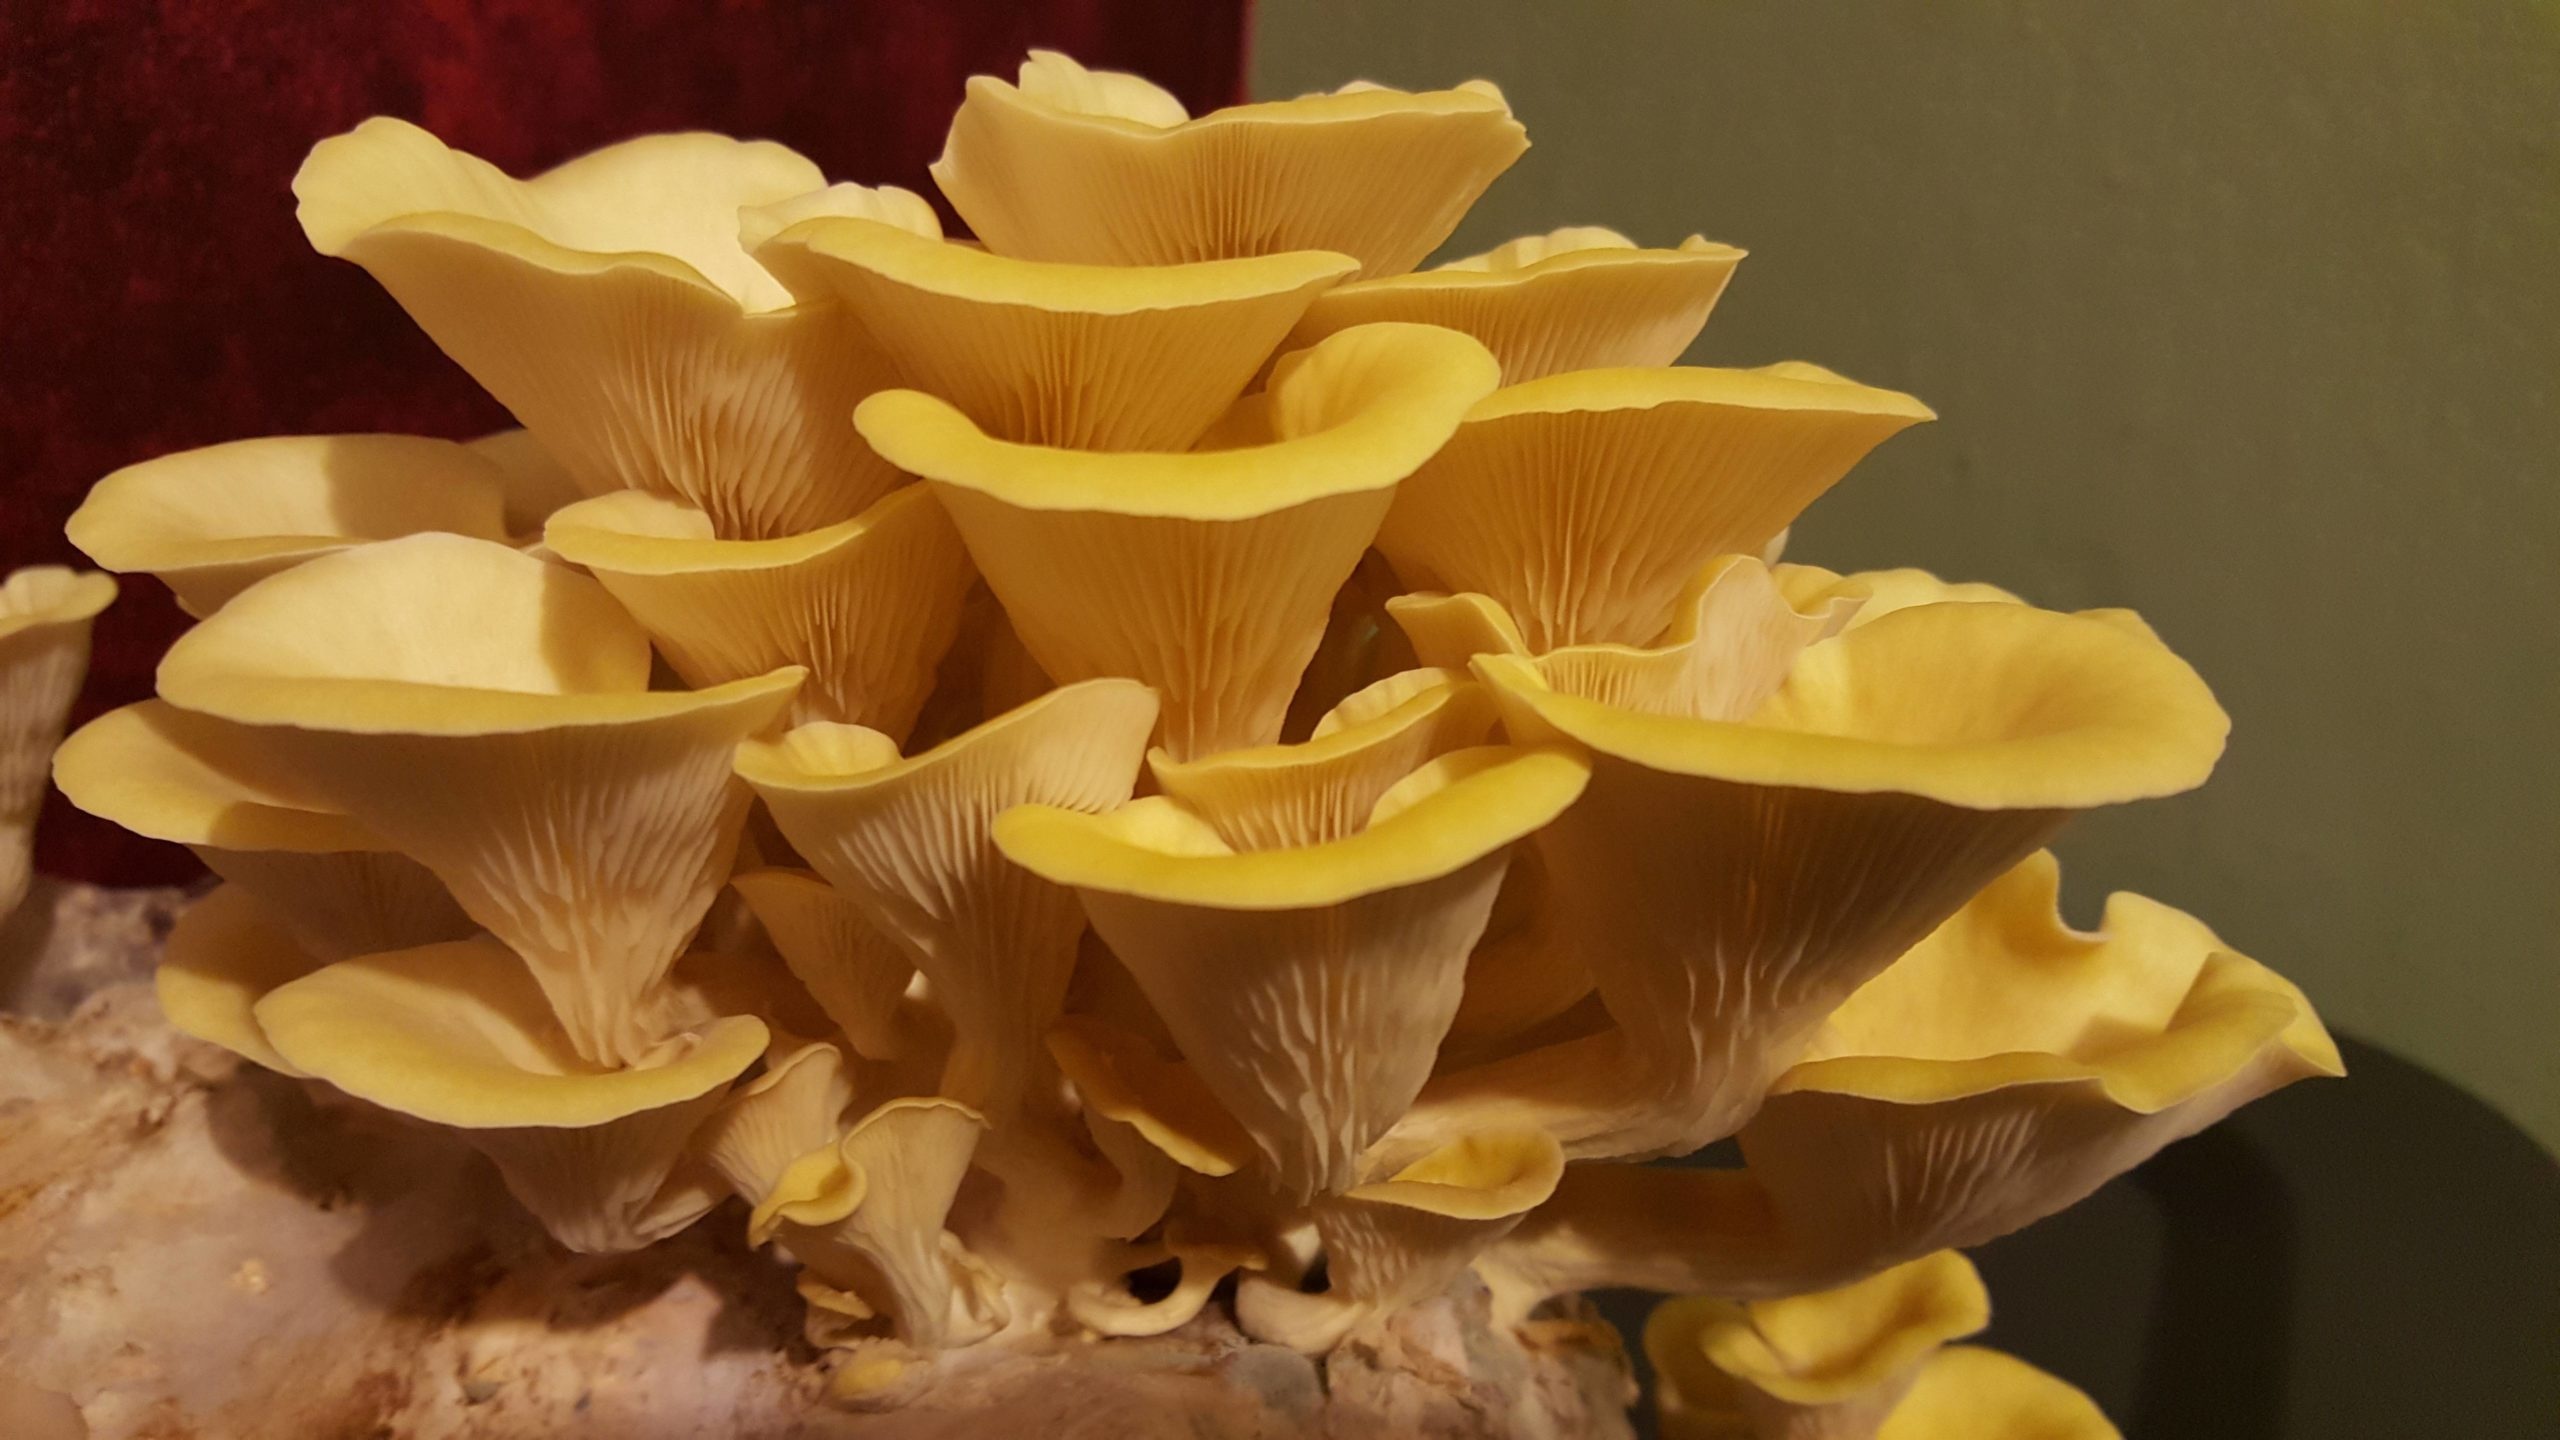 Pleurotus citrinopileatus, Golden oyster mushrooms, Health benefits, Mushroom identification, 2560x1440 HD Desktop